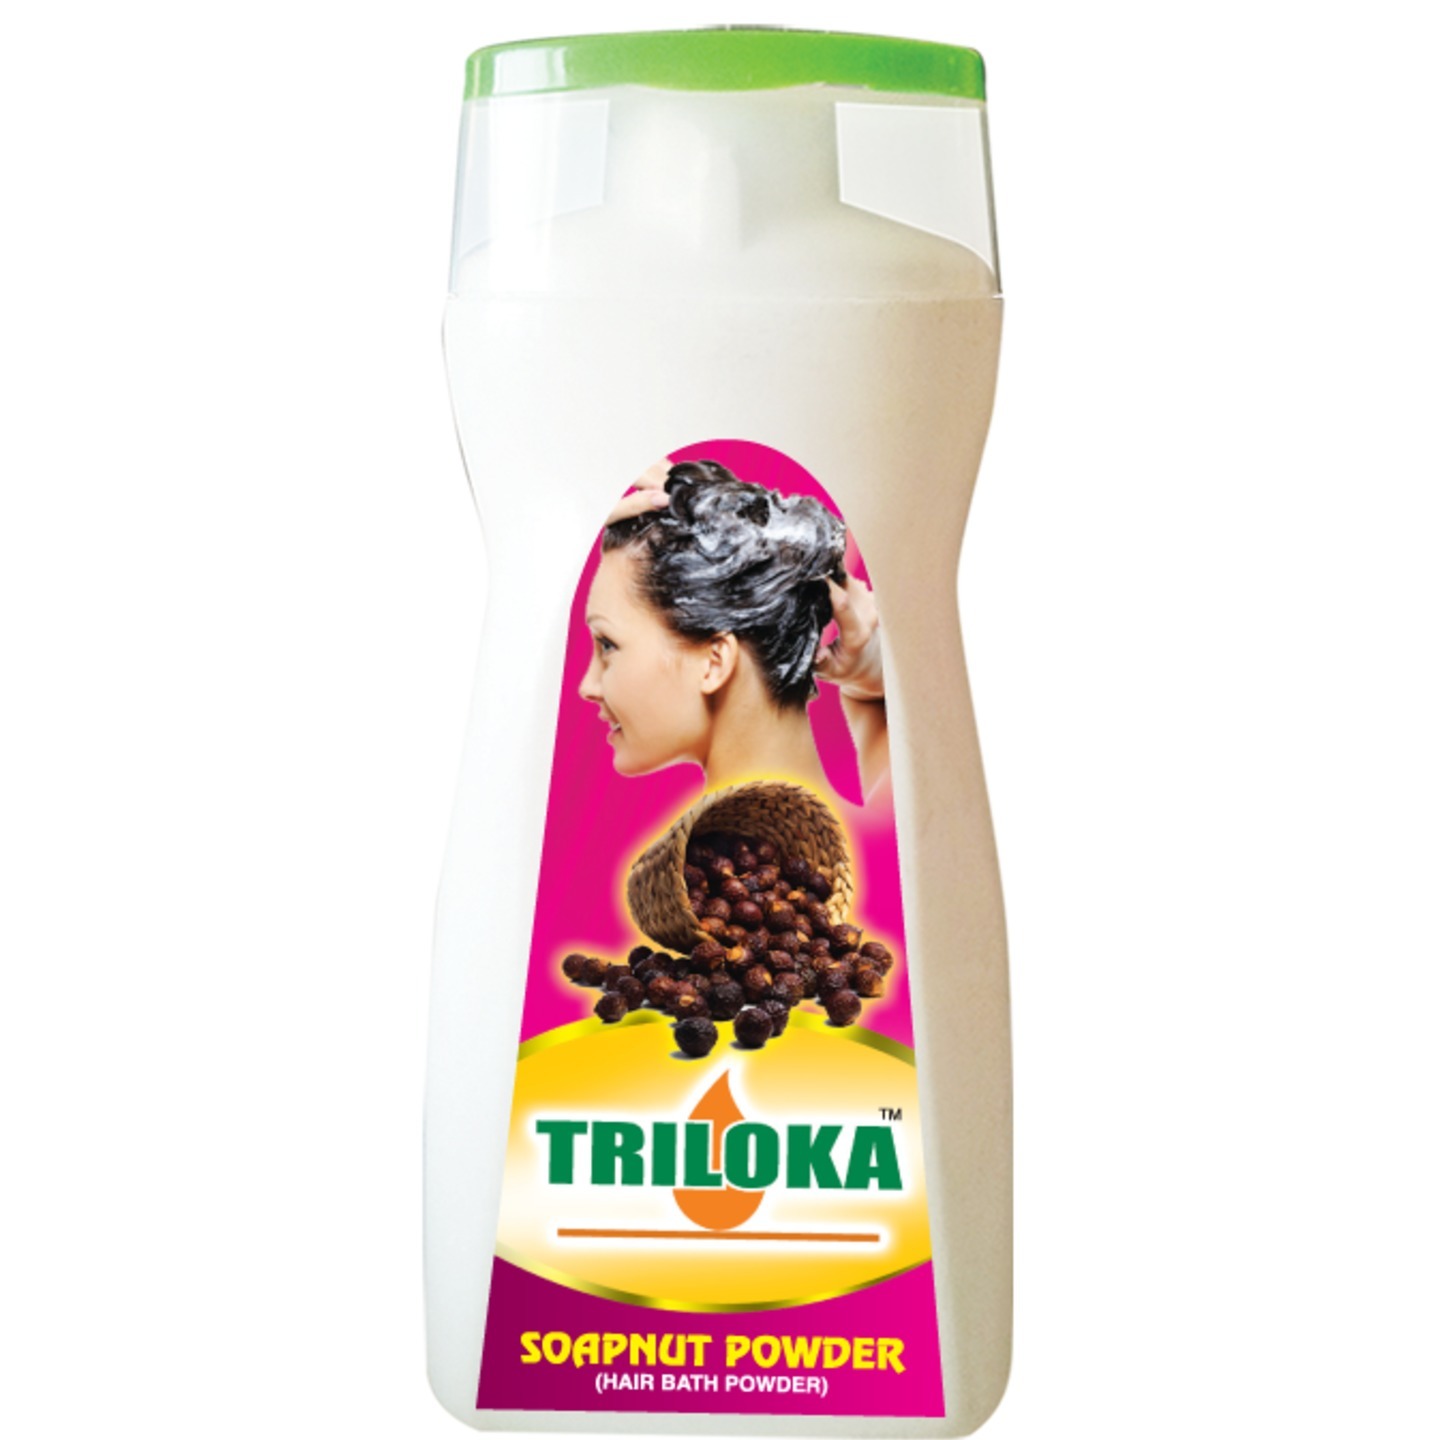 New Triloka Soapnut Head Bathing Powder( Shampoo Powder) - 1 Dozen